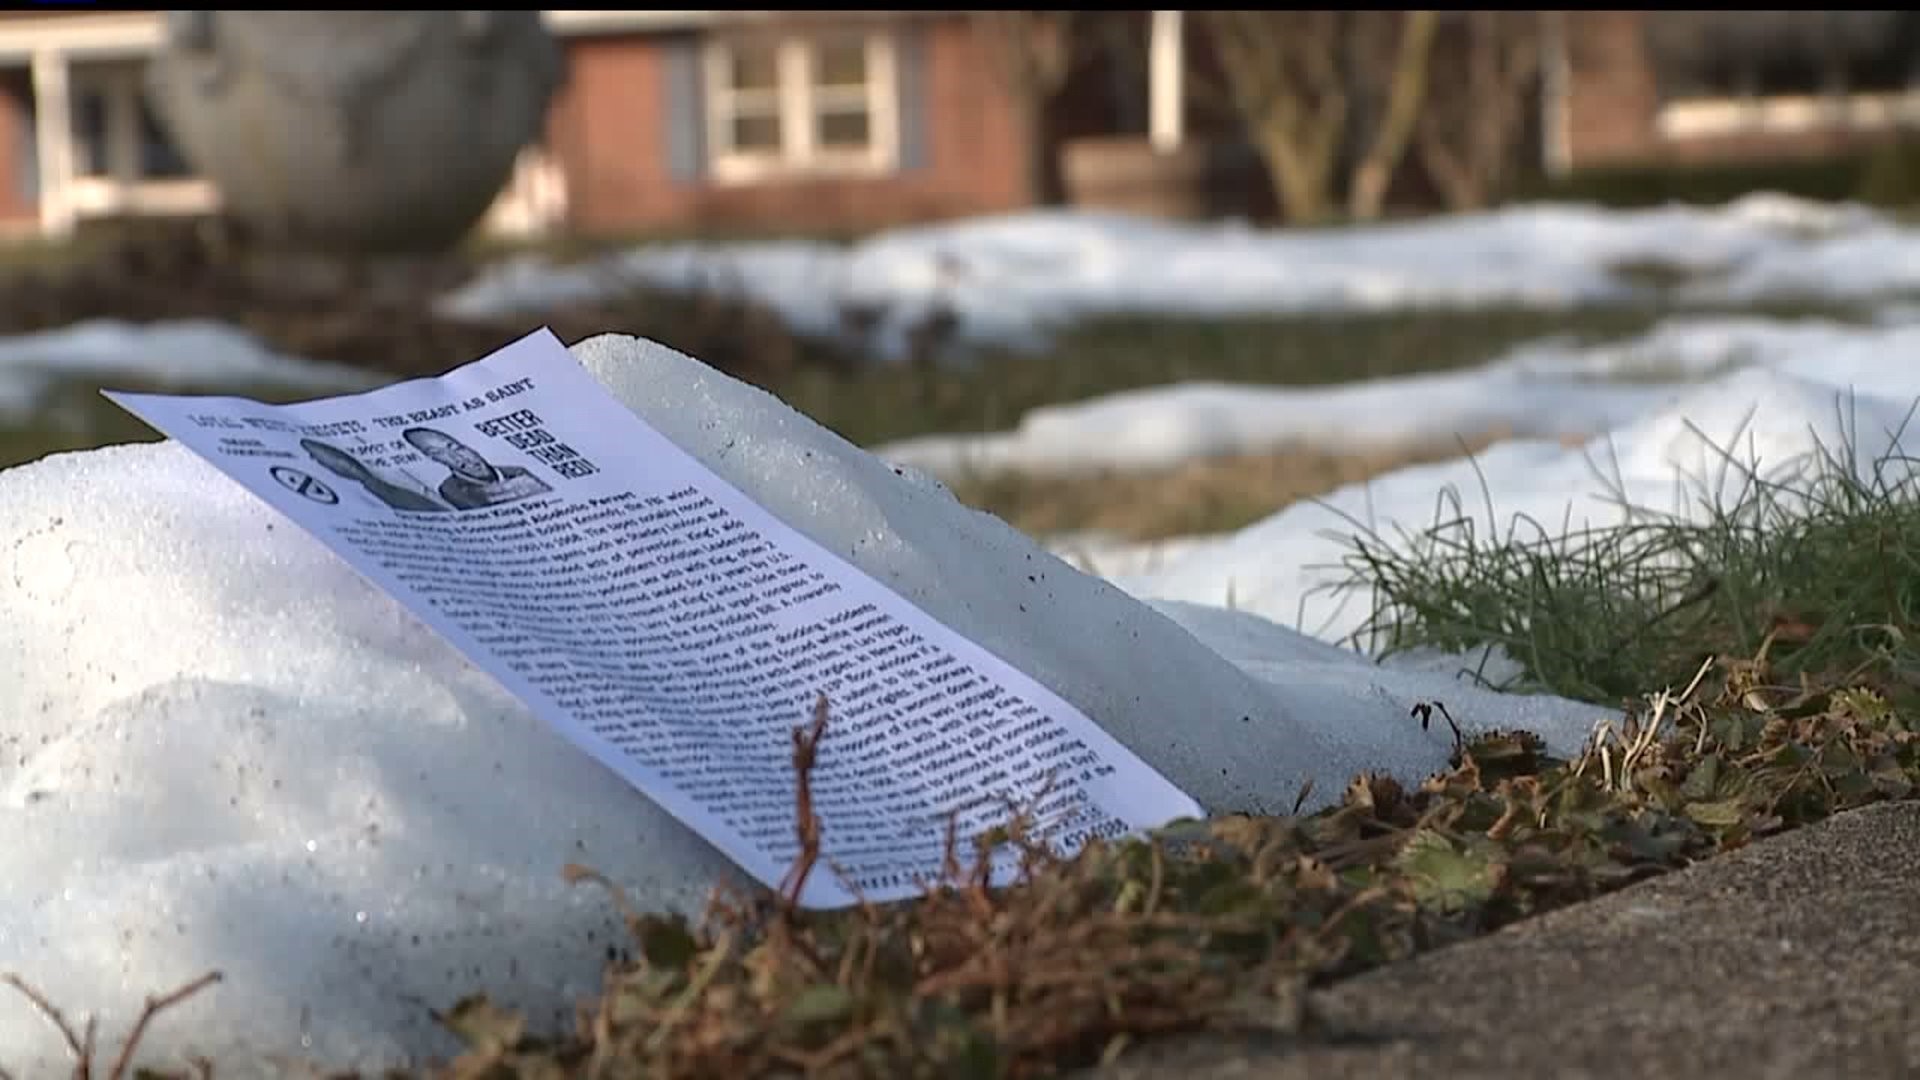 Carlisle neighborhood disturbed by KKK fliers found on lawns